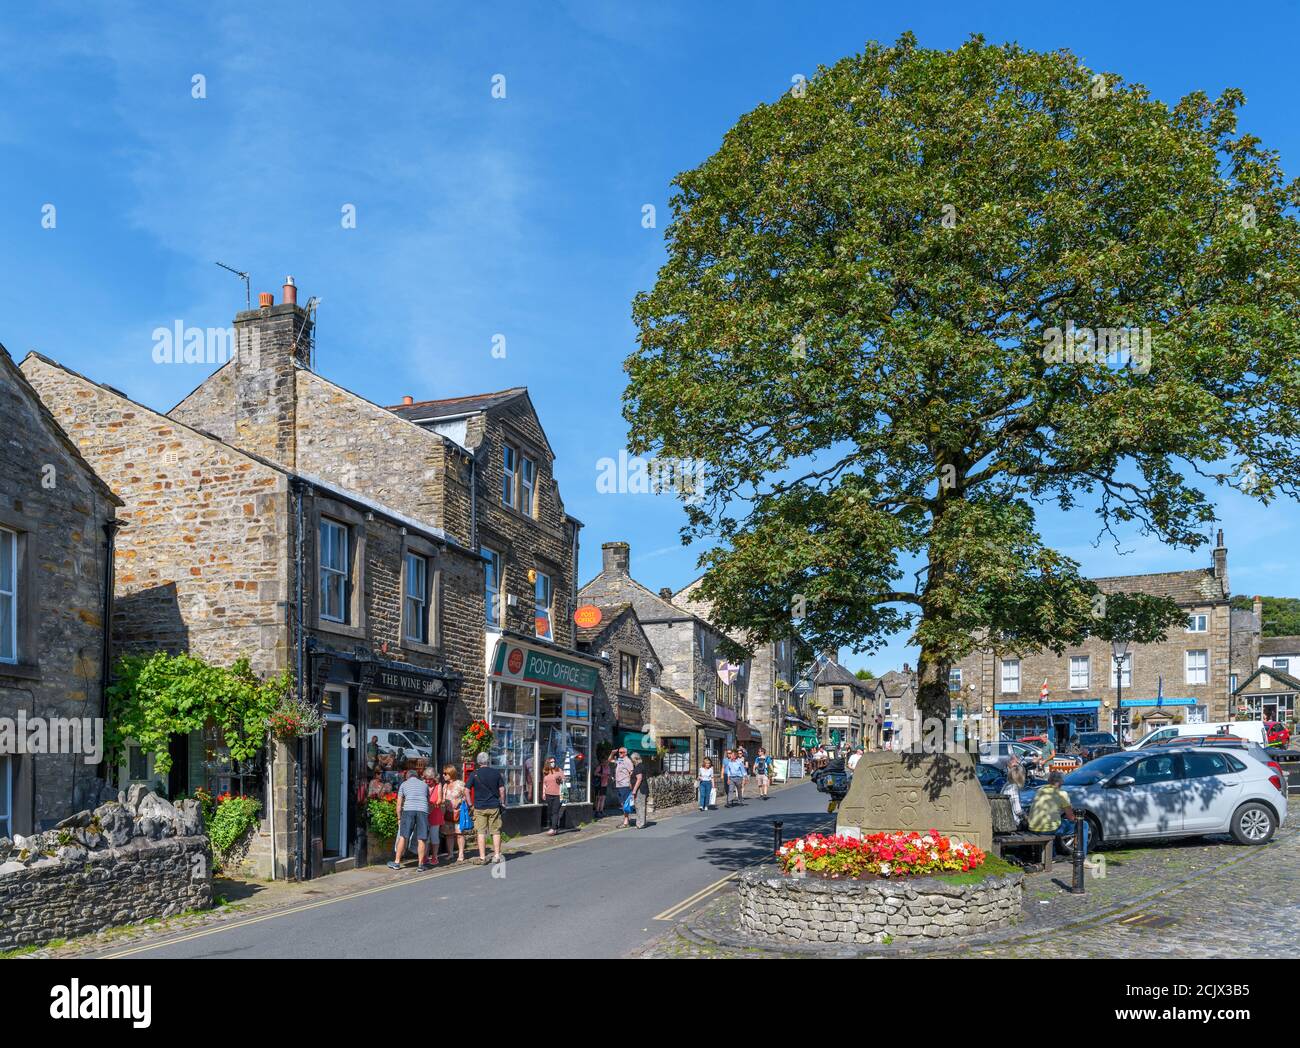 The Square and Main Street im traditionellen englischen Dorf Grassington, Yorkshire Dales National Park, North Yorkshire, England, Großbritannien. Stockfoto